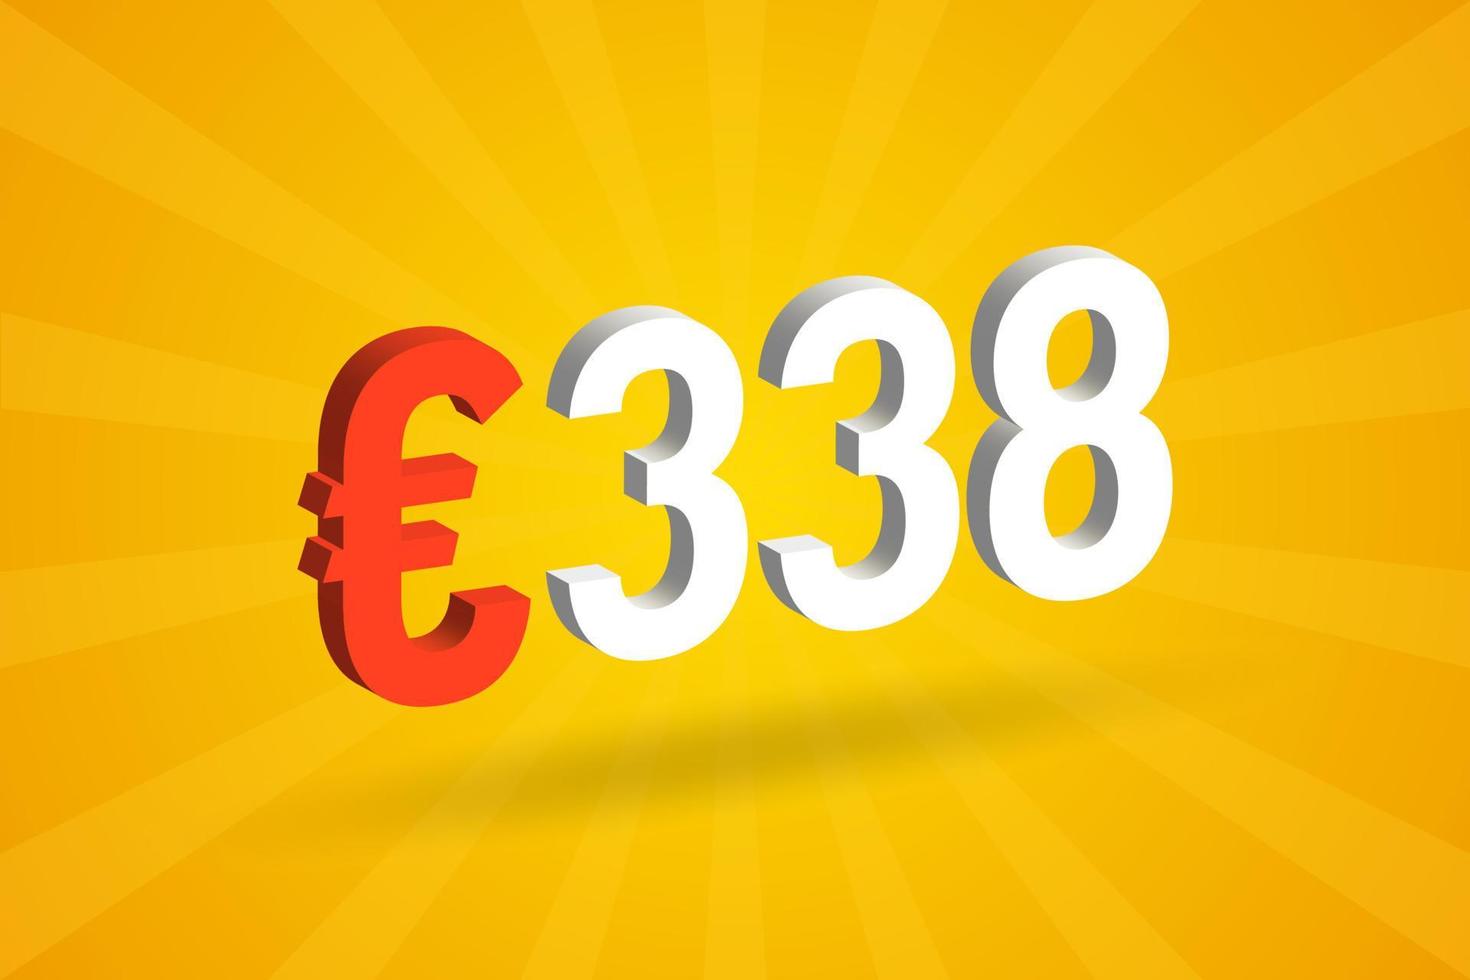 338 Euro Currency 3D vector text symbol. 3D 338 Euro European Union Money stock vector